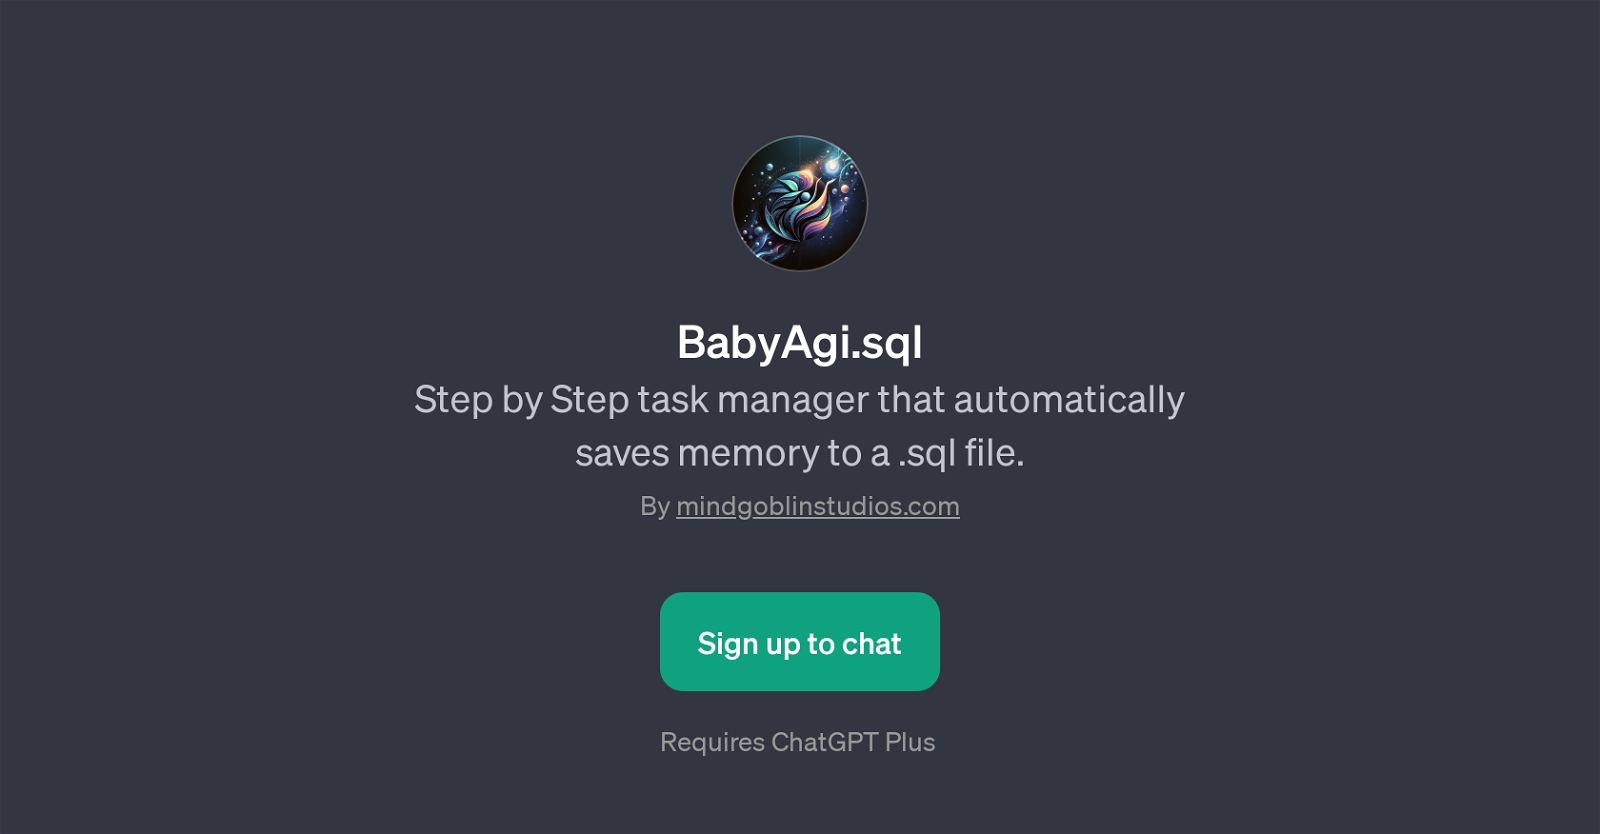 BabyAgi.sql website